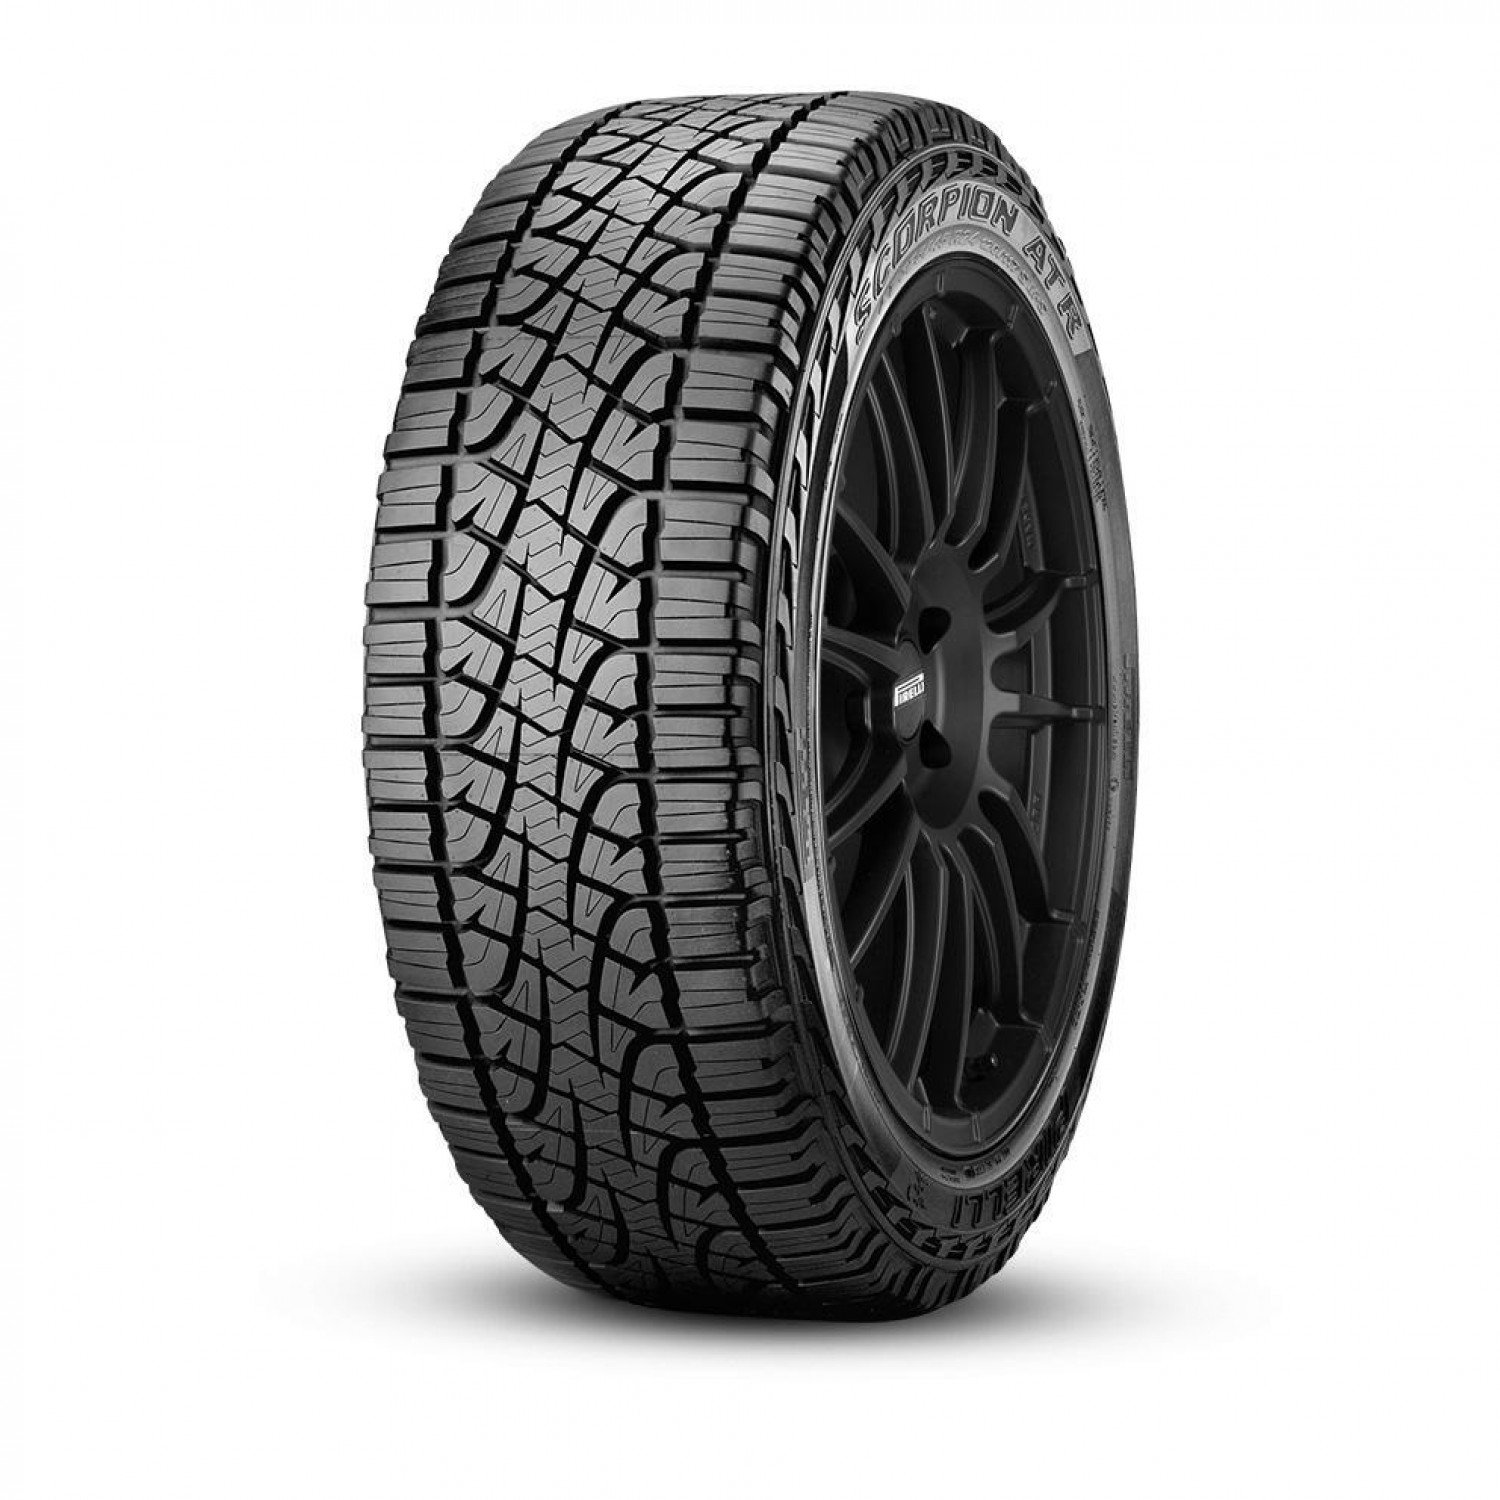 Pirelli Scorpion All Terrain Plus Reversable Outlined White Letters/Black  Sidewall Tire (245/70R17 110T) vzn121972